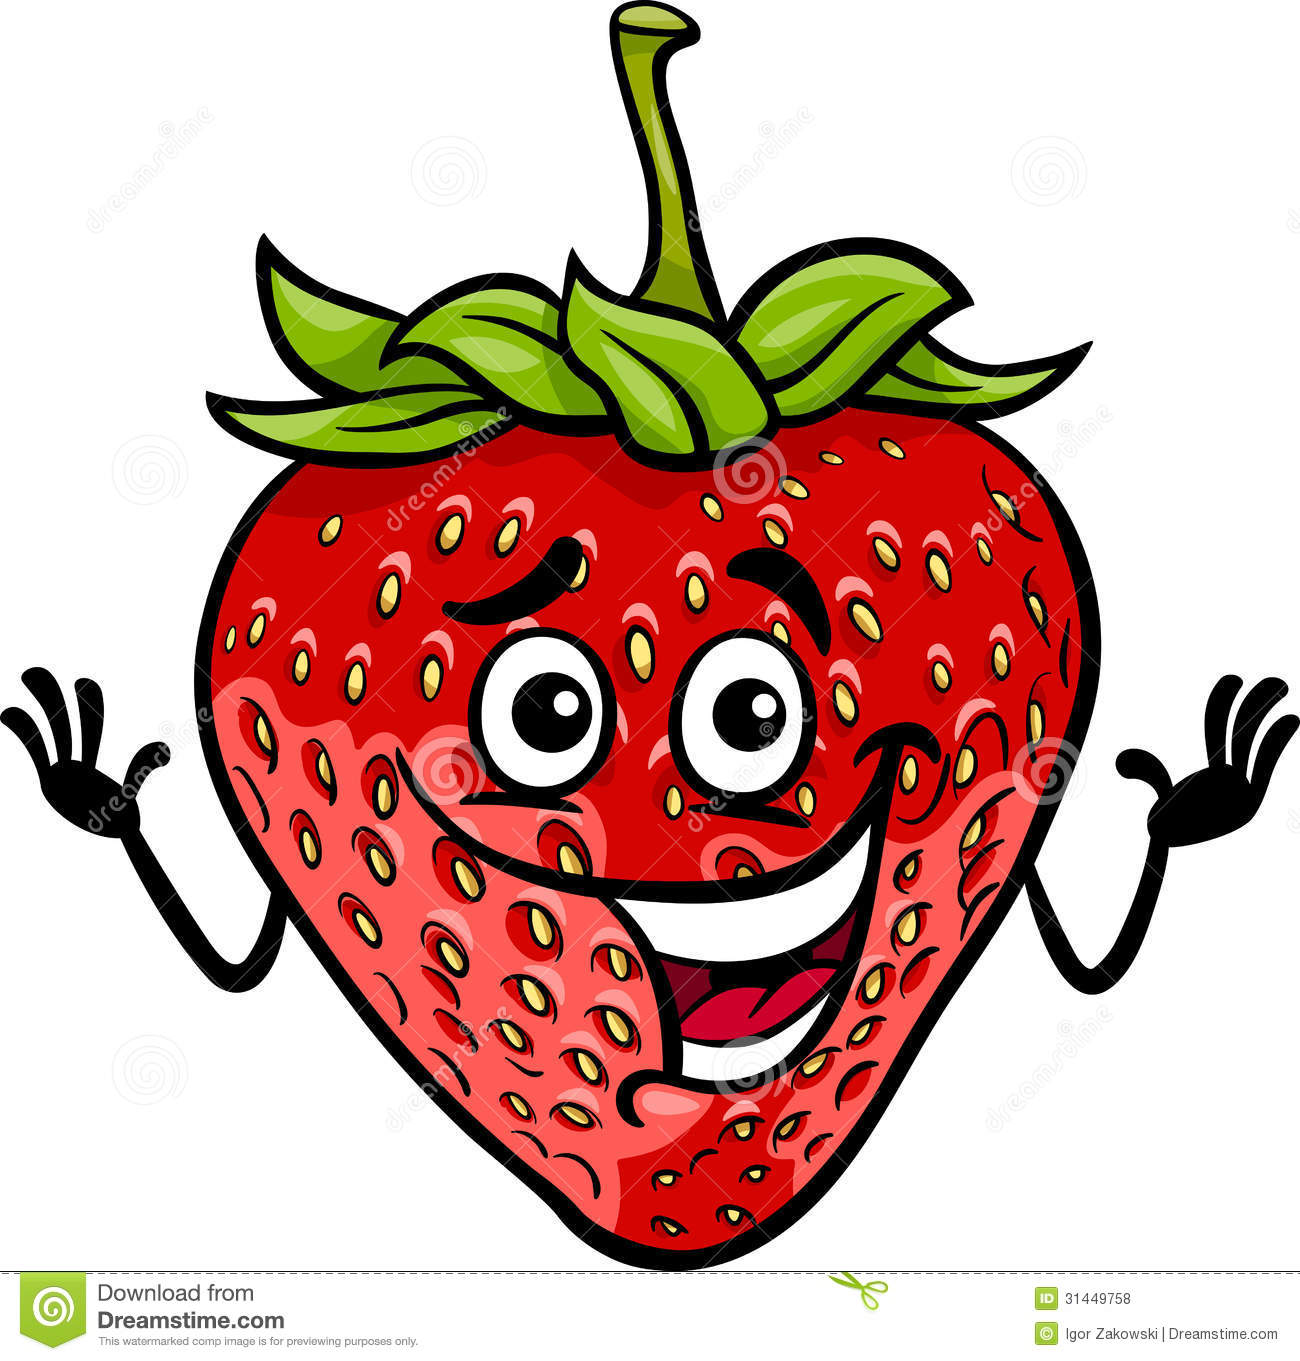 Funny Strawberry Fruit Cartoon Illustration Royalty Free Stock Photos